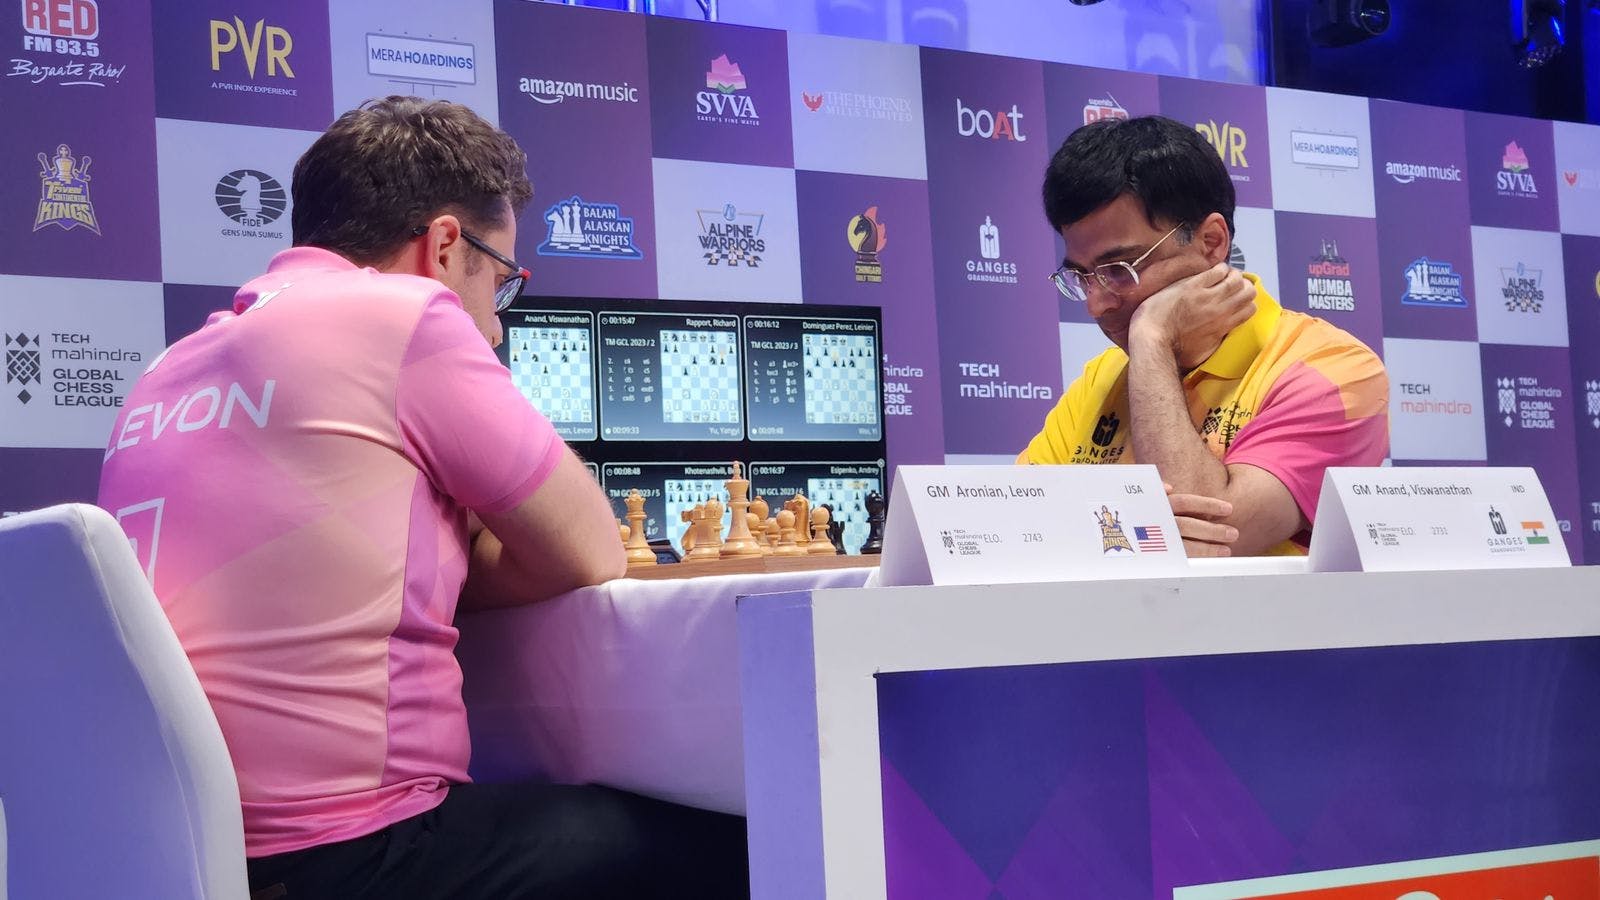 Dubai Hosts the First Global Chess League